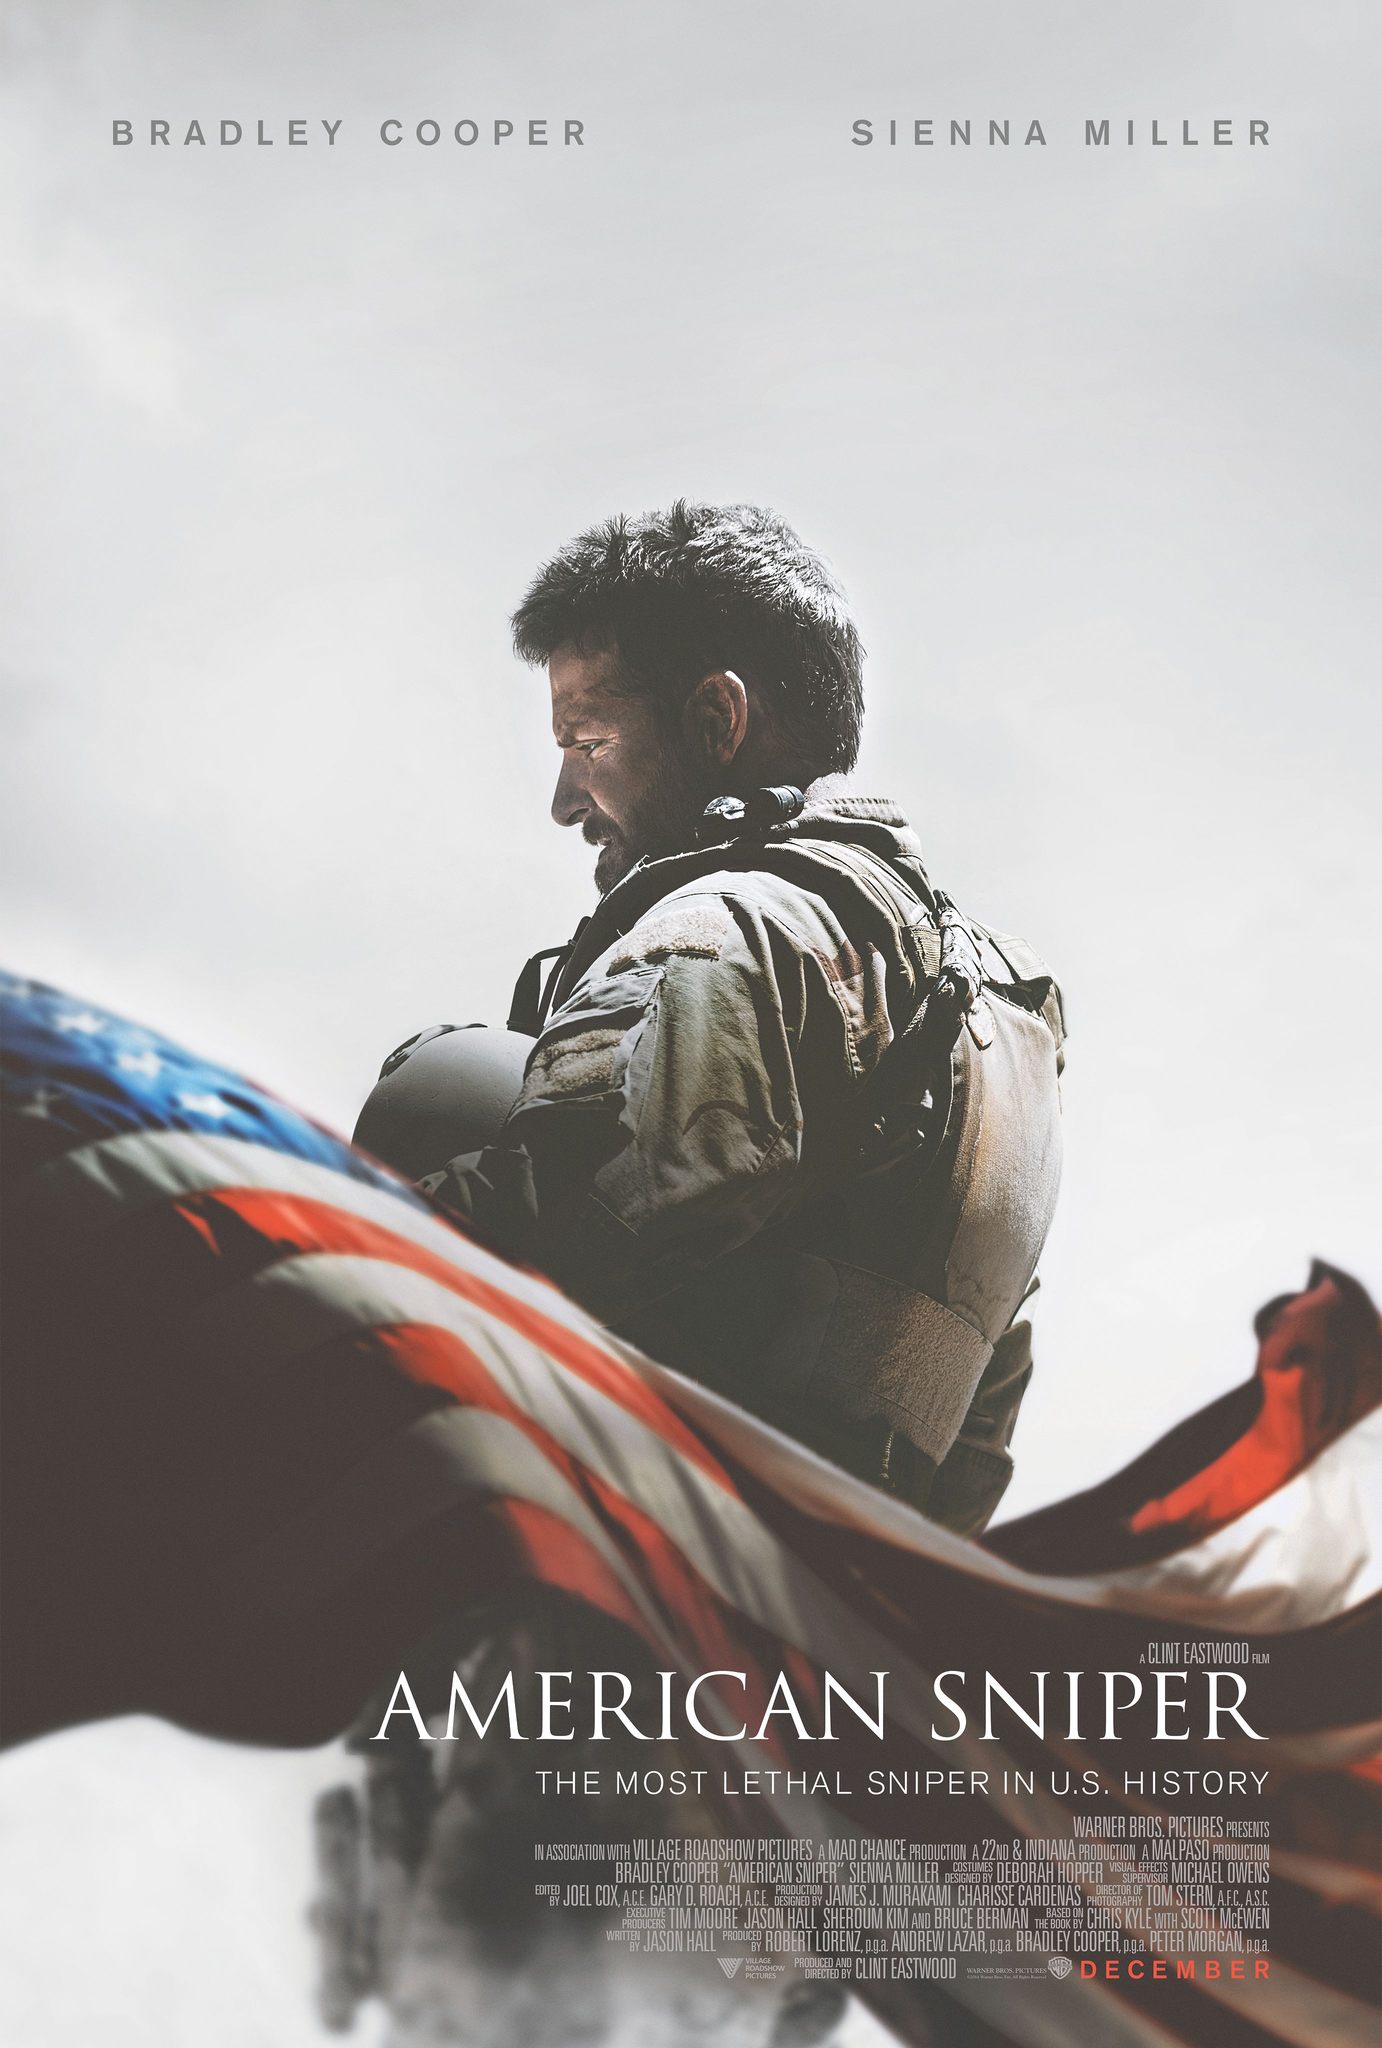 Nonton film American Sniper layarkaca21 indoxx1 ganool online streaming terbaru